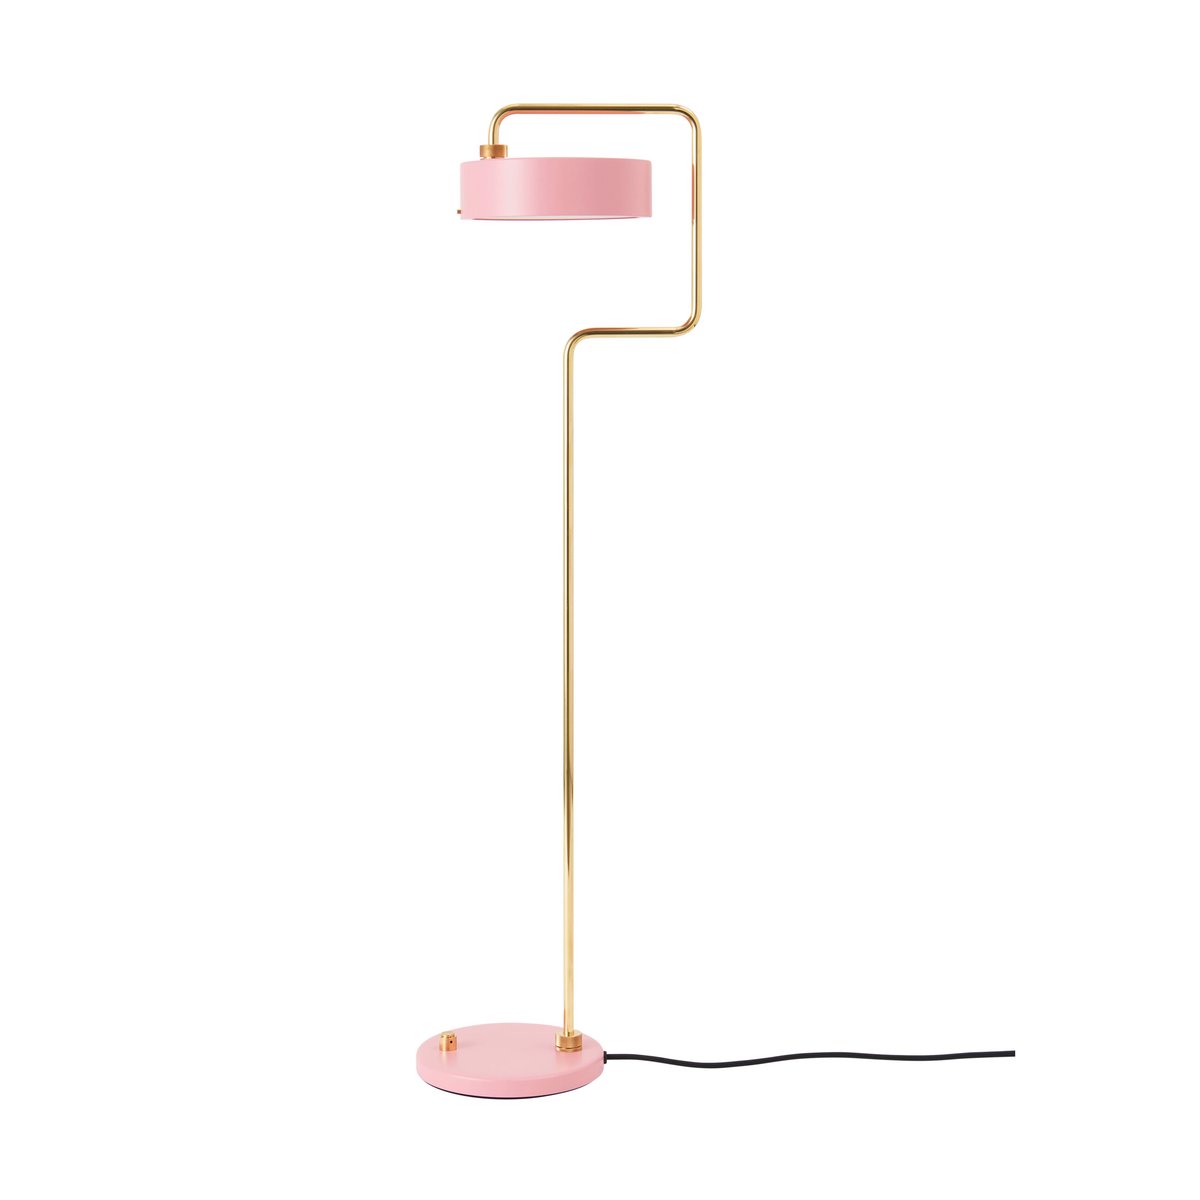 Made By Hand Petite Machine vloerlamp Light pink